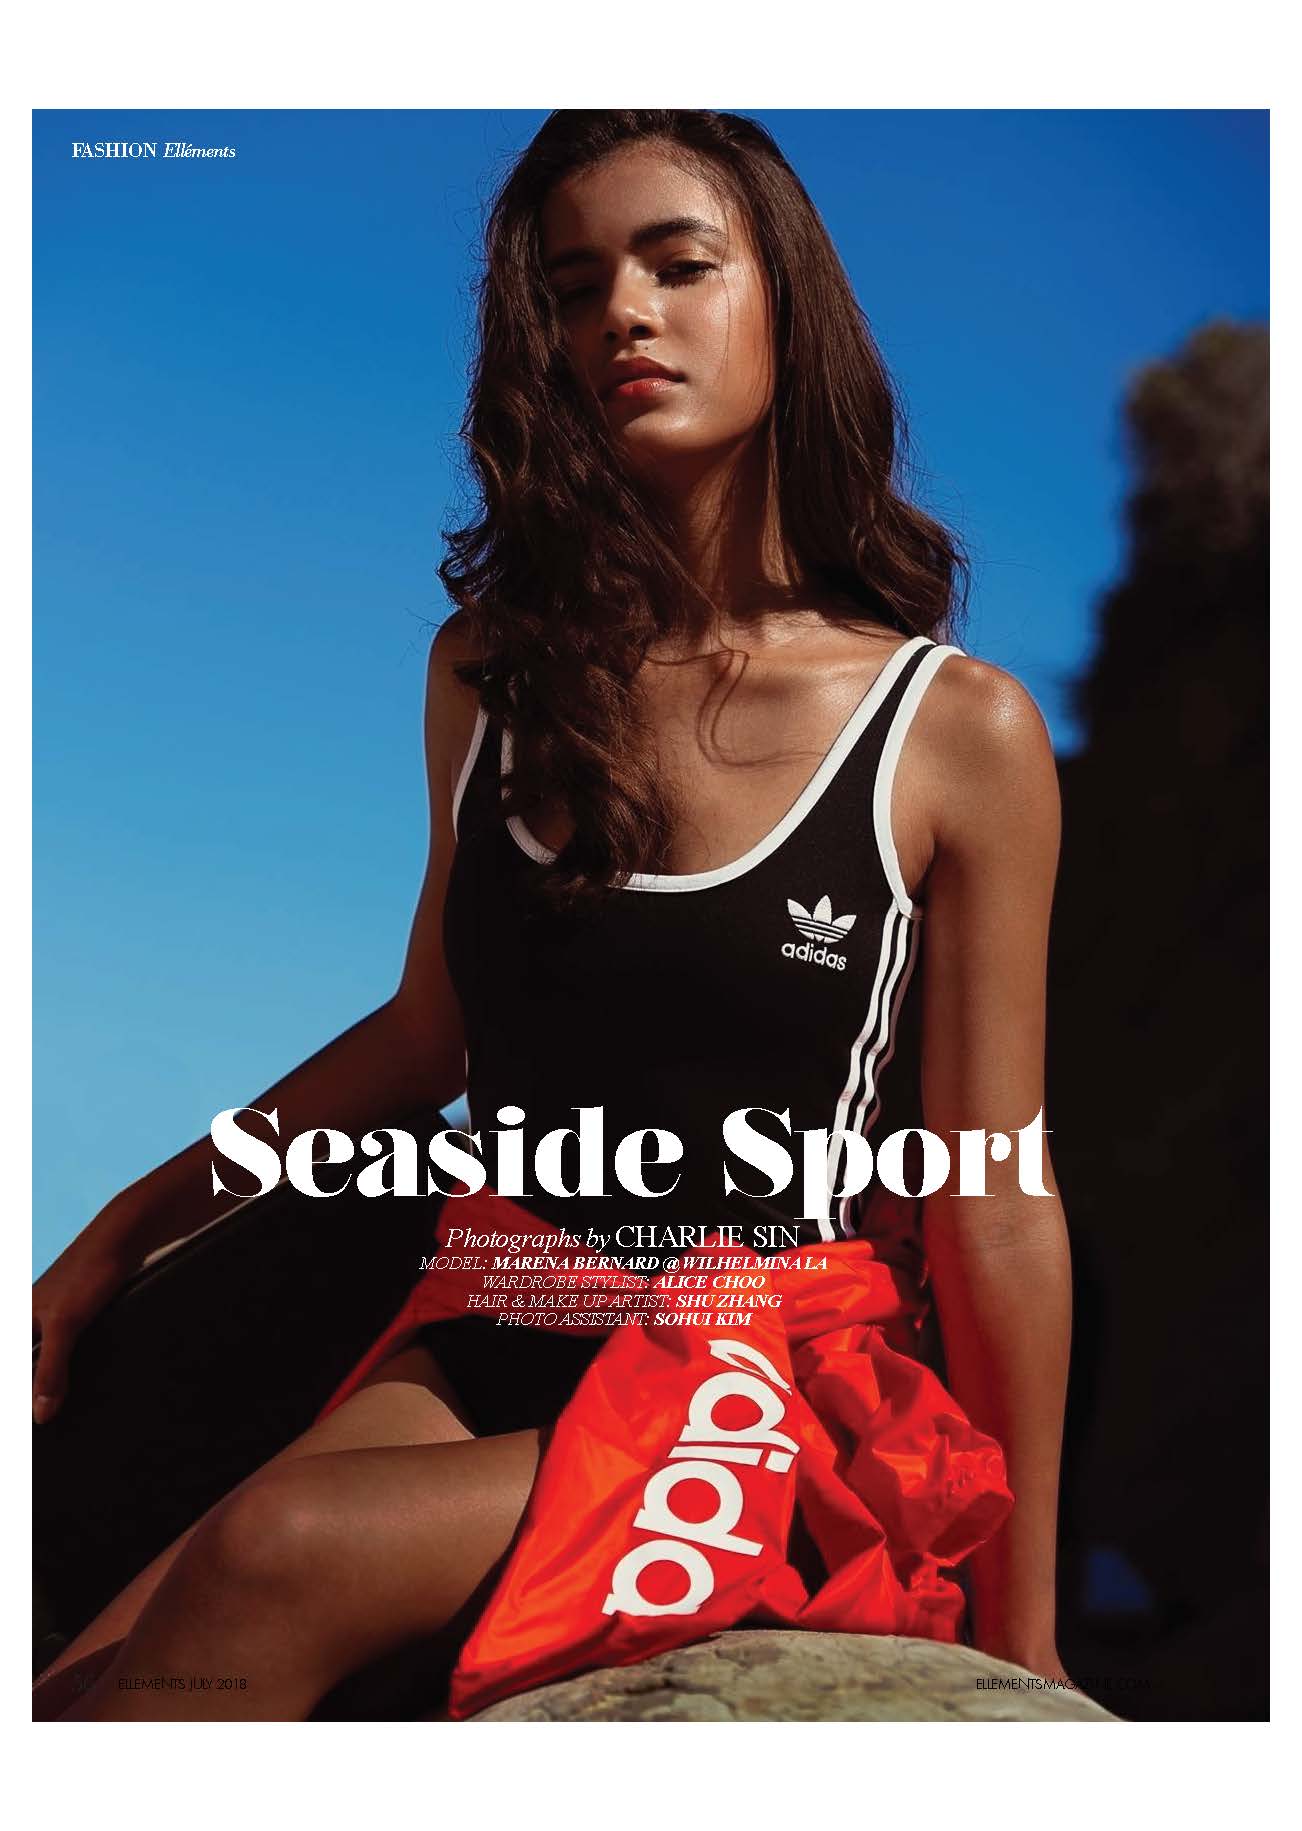 Seaside Sport - Editorial Photography LA Charlie Sin 